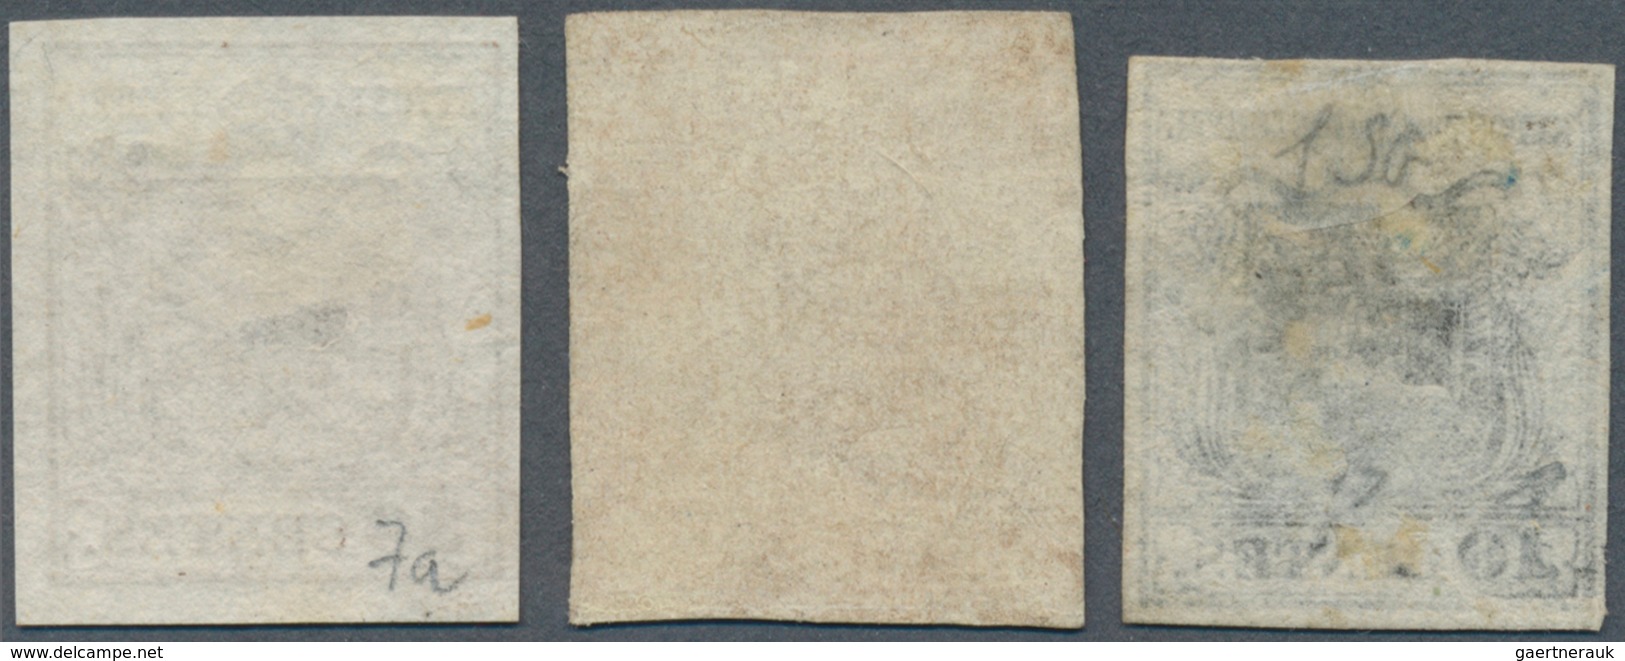 Österreich - Lombardei Und Venetien: 1850, 10 C Schwarz, 15 C Rot U. 30 C Braun, Je Handpapier In Ty - Lombardije-Venetië